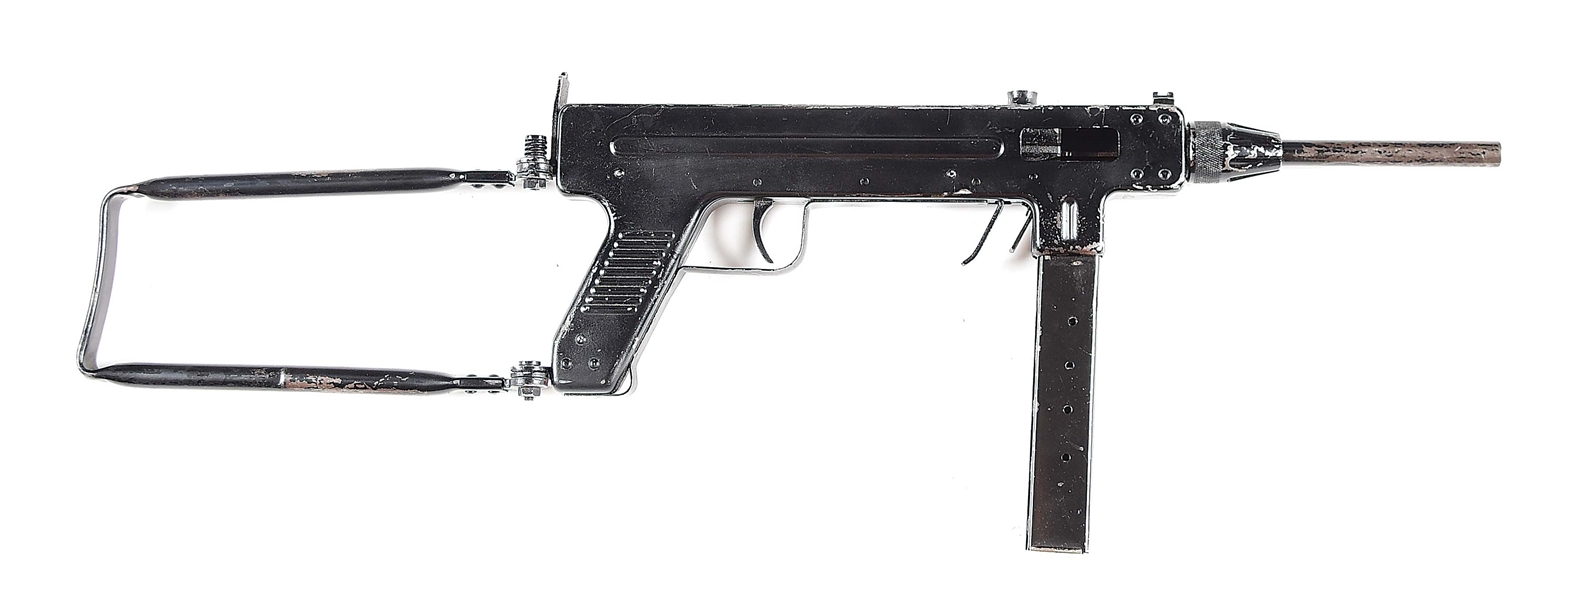 (N) UNUSUAL EARLY PRODUCTION VENEZUELA CREST “F.A.P.” MARKED MADSEN M-50 MACHINE GUN (PRE-86 DEALER SAMPLE).